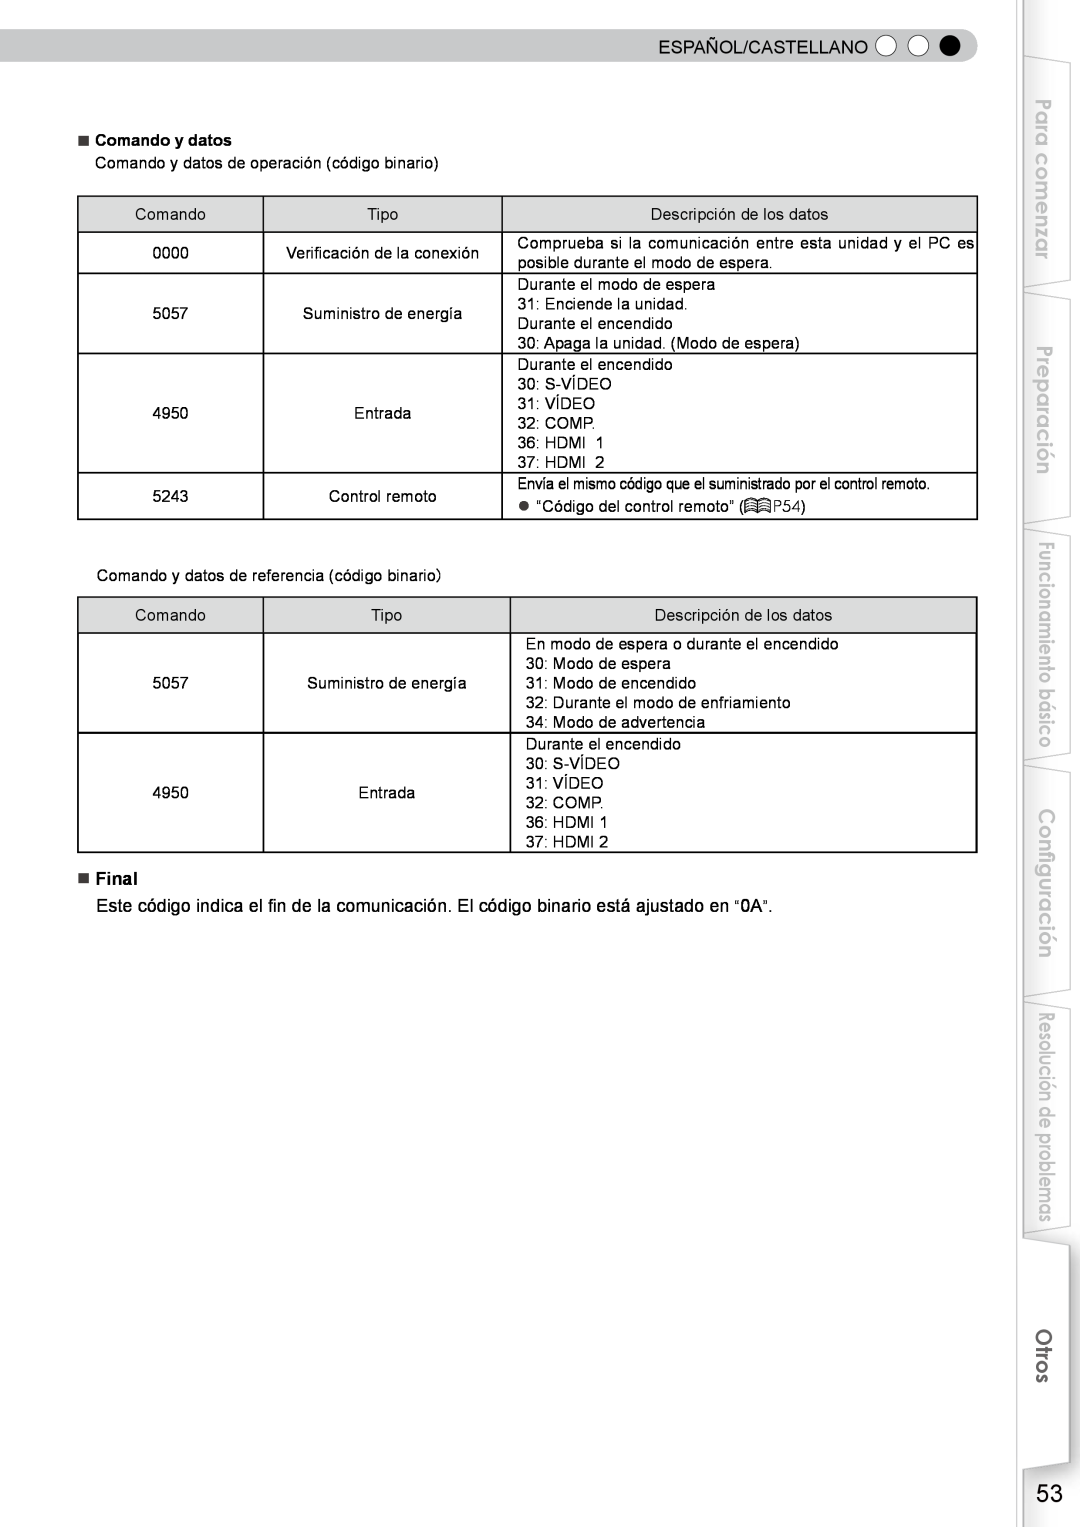 JVC DLA-RS10 manual Para comenzar, Otros, Español/Castellano, Final 